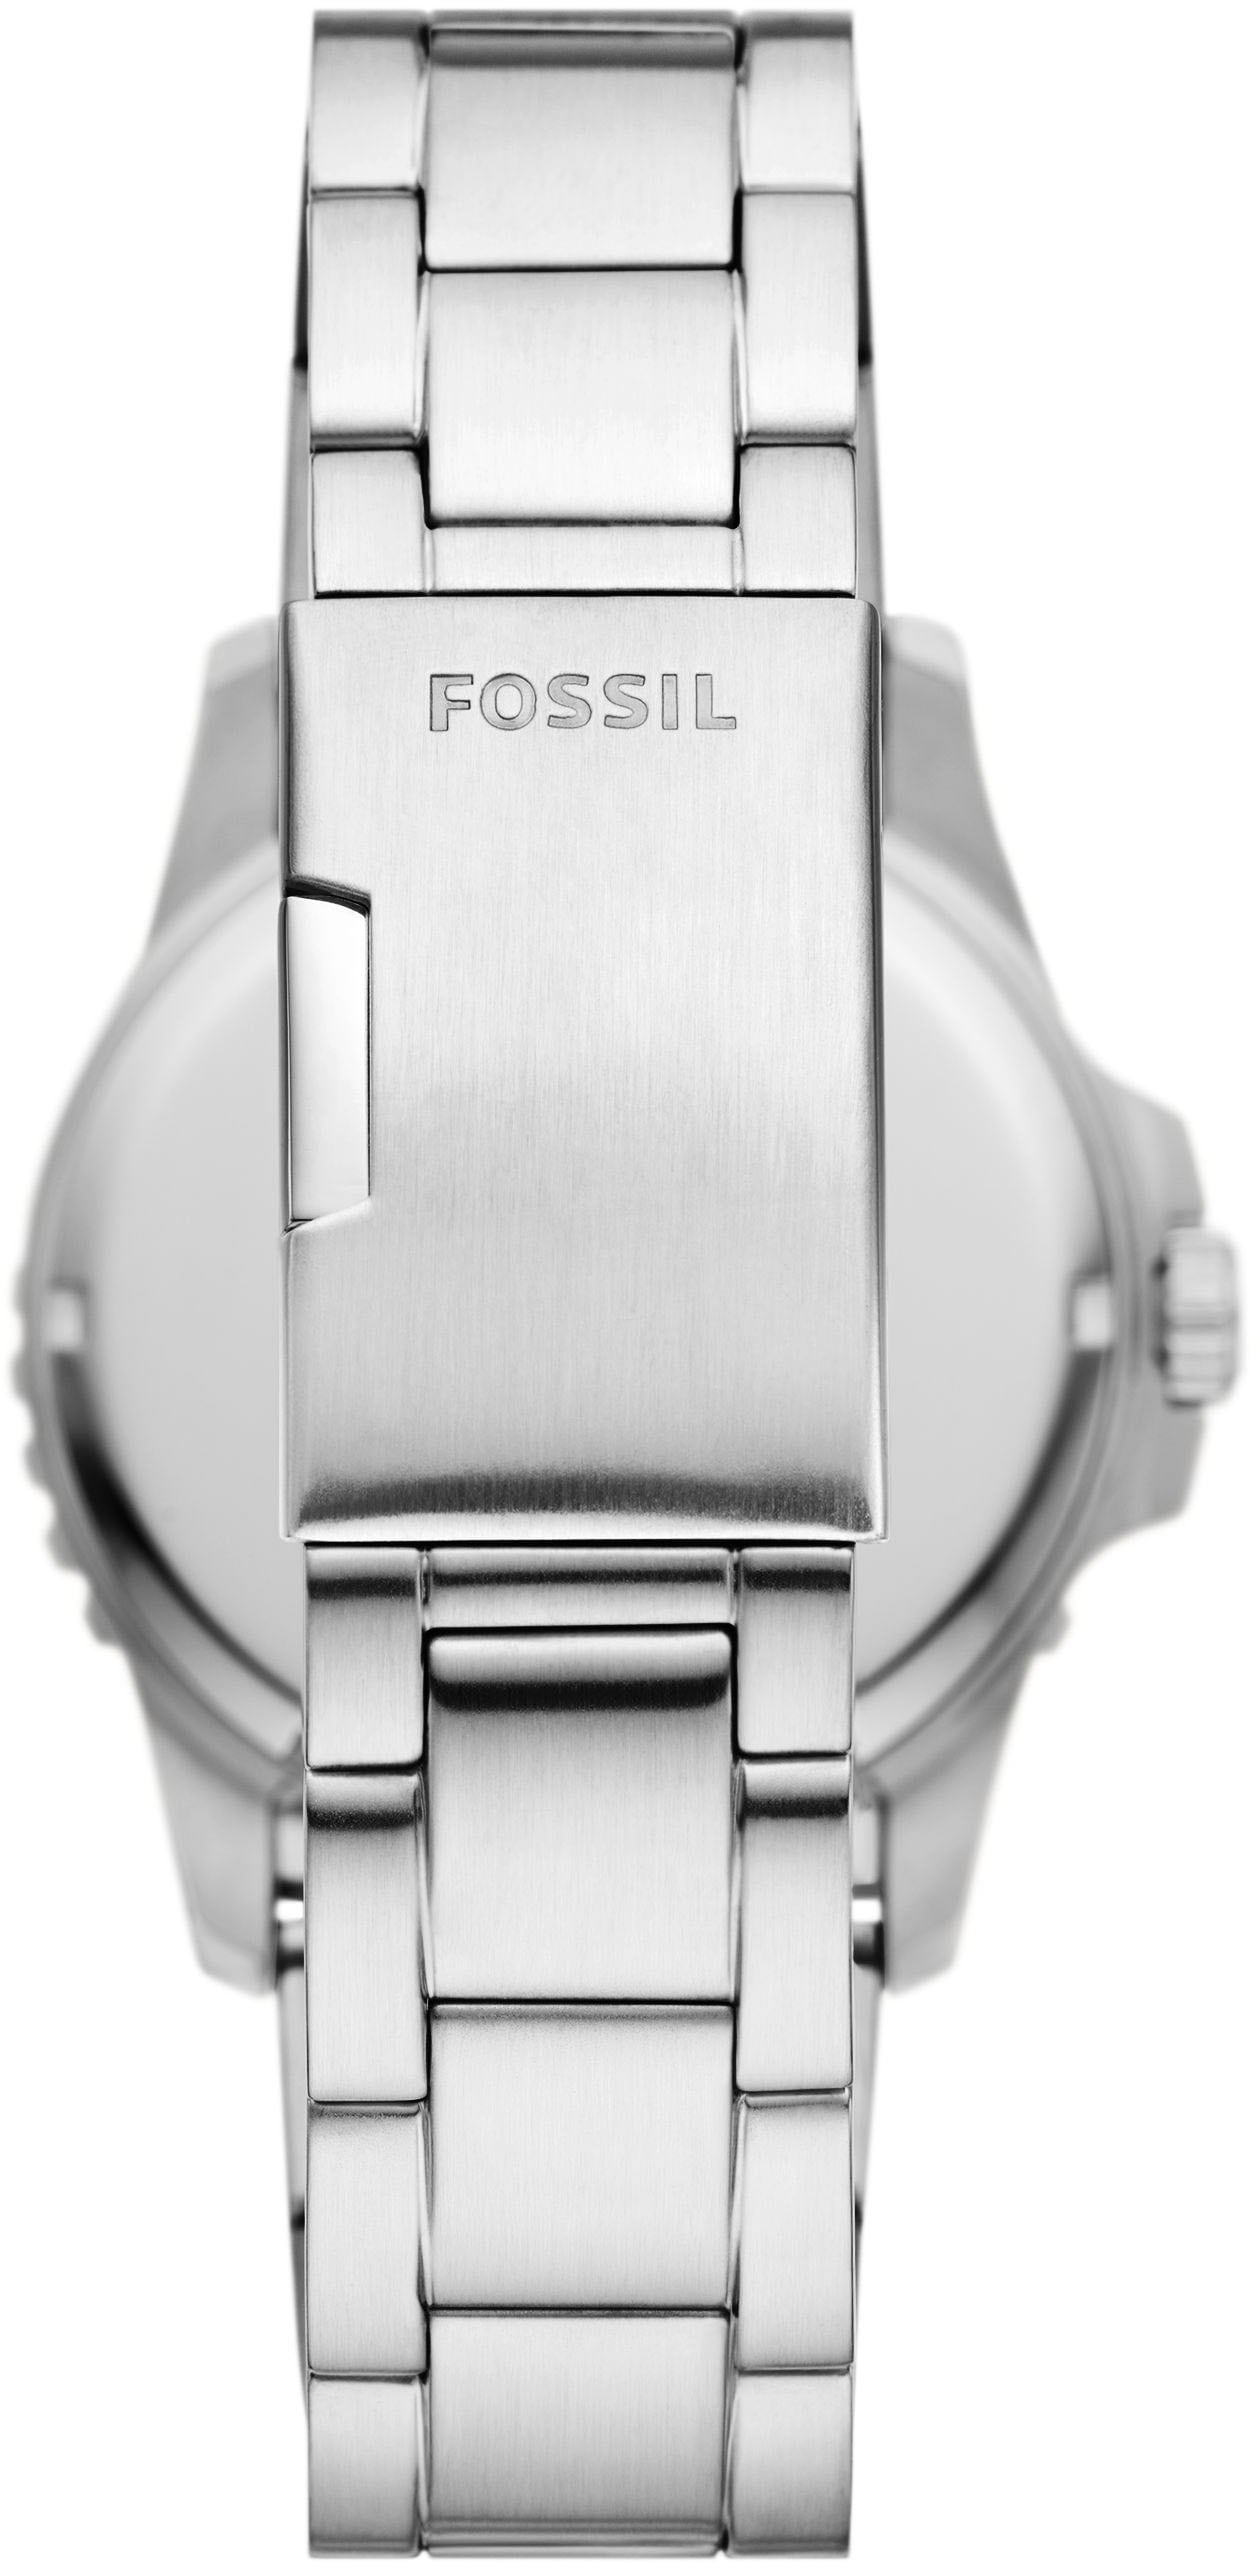 Fossil Quarzuhr »FOSSIL BLUE DIVE, FS6038« online kaufen | I'm walking